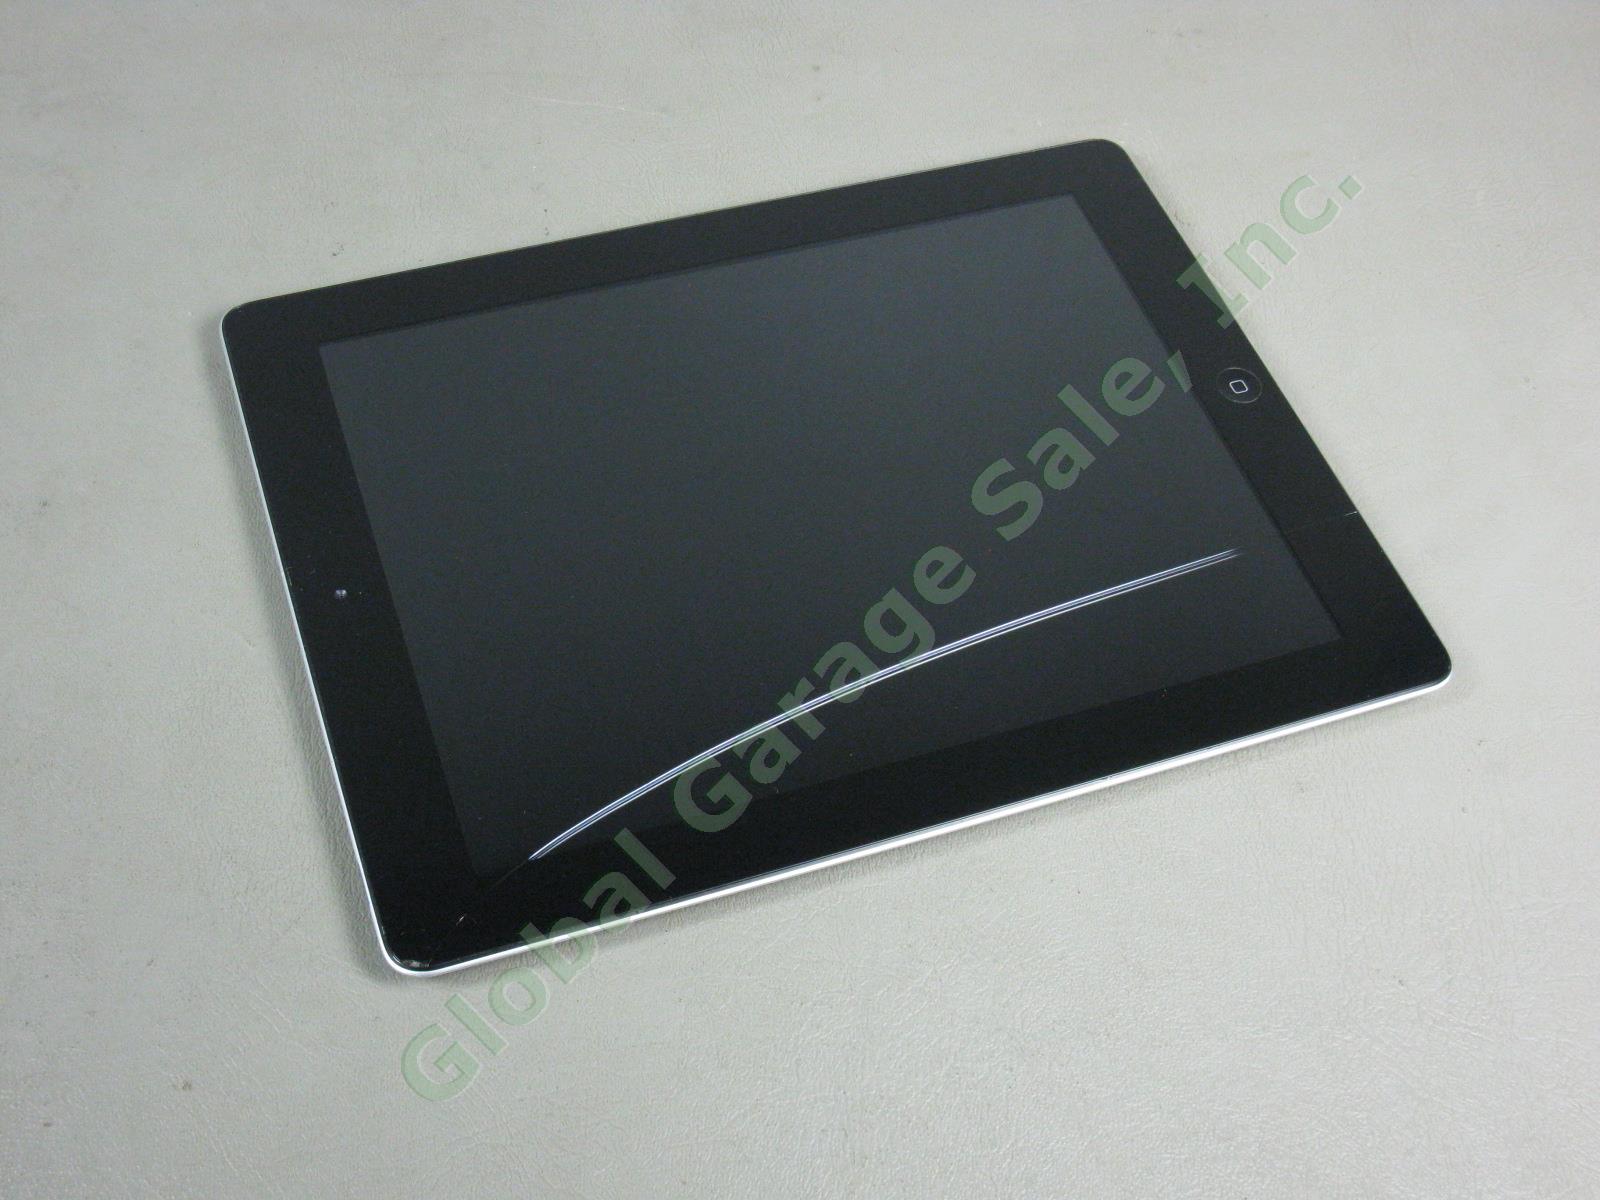 Apple iPad 2 Wifi 32GB Black Tablet MC770LL/A A1395 Works Great Screen Crack NR! 4